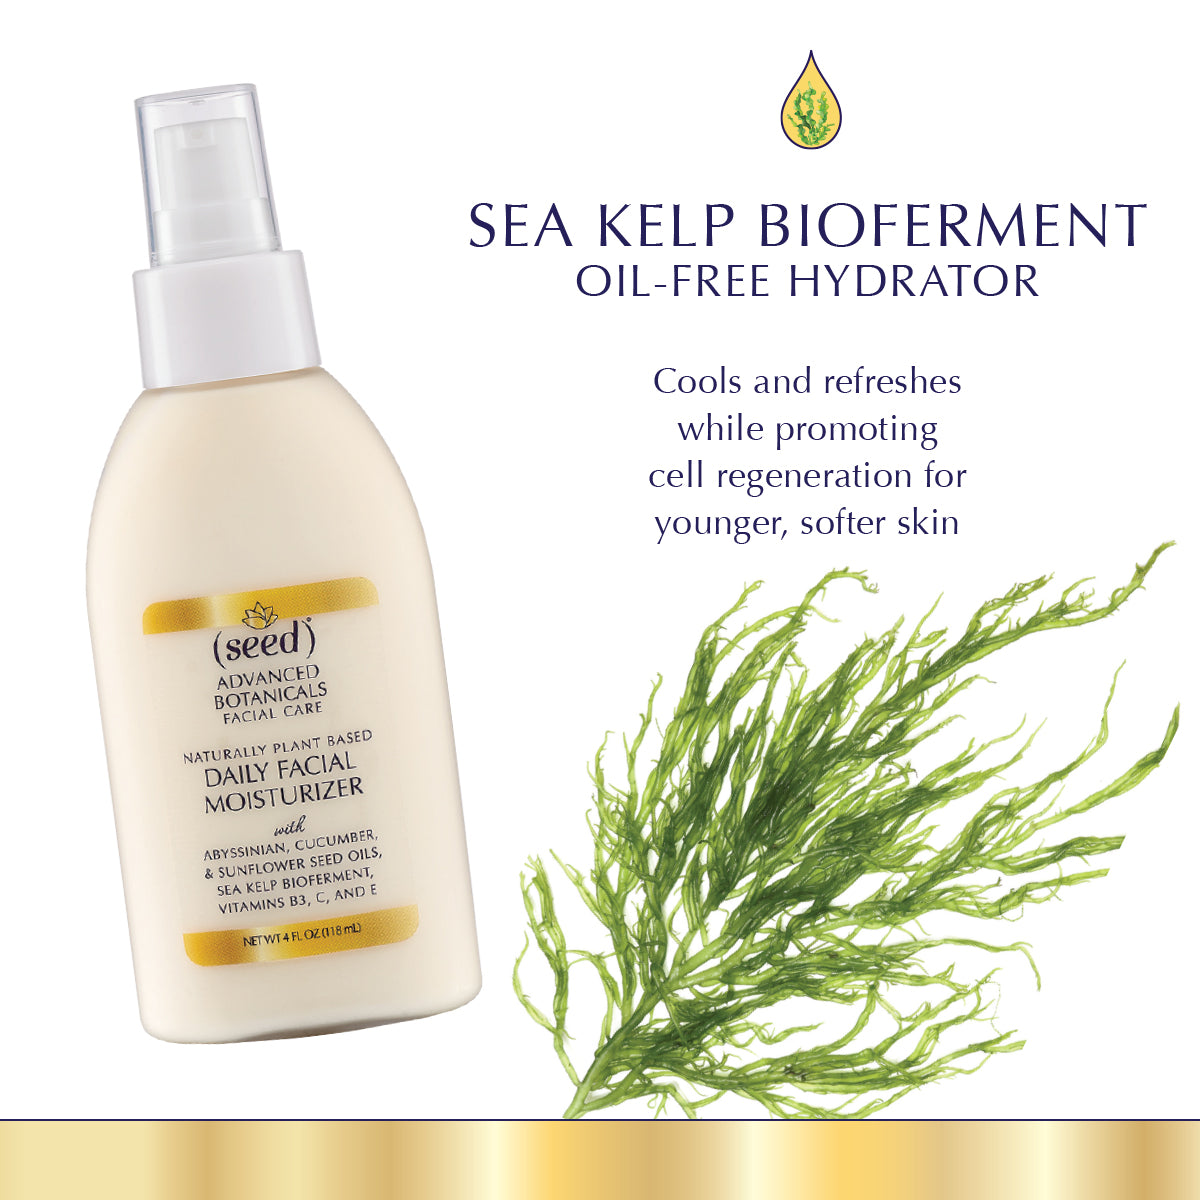 Seed Advanced Botanicals Daily Facial Moisturizer features Sea Kelp Bioferment